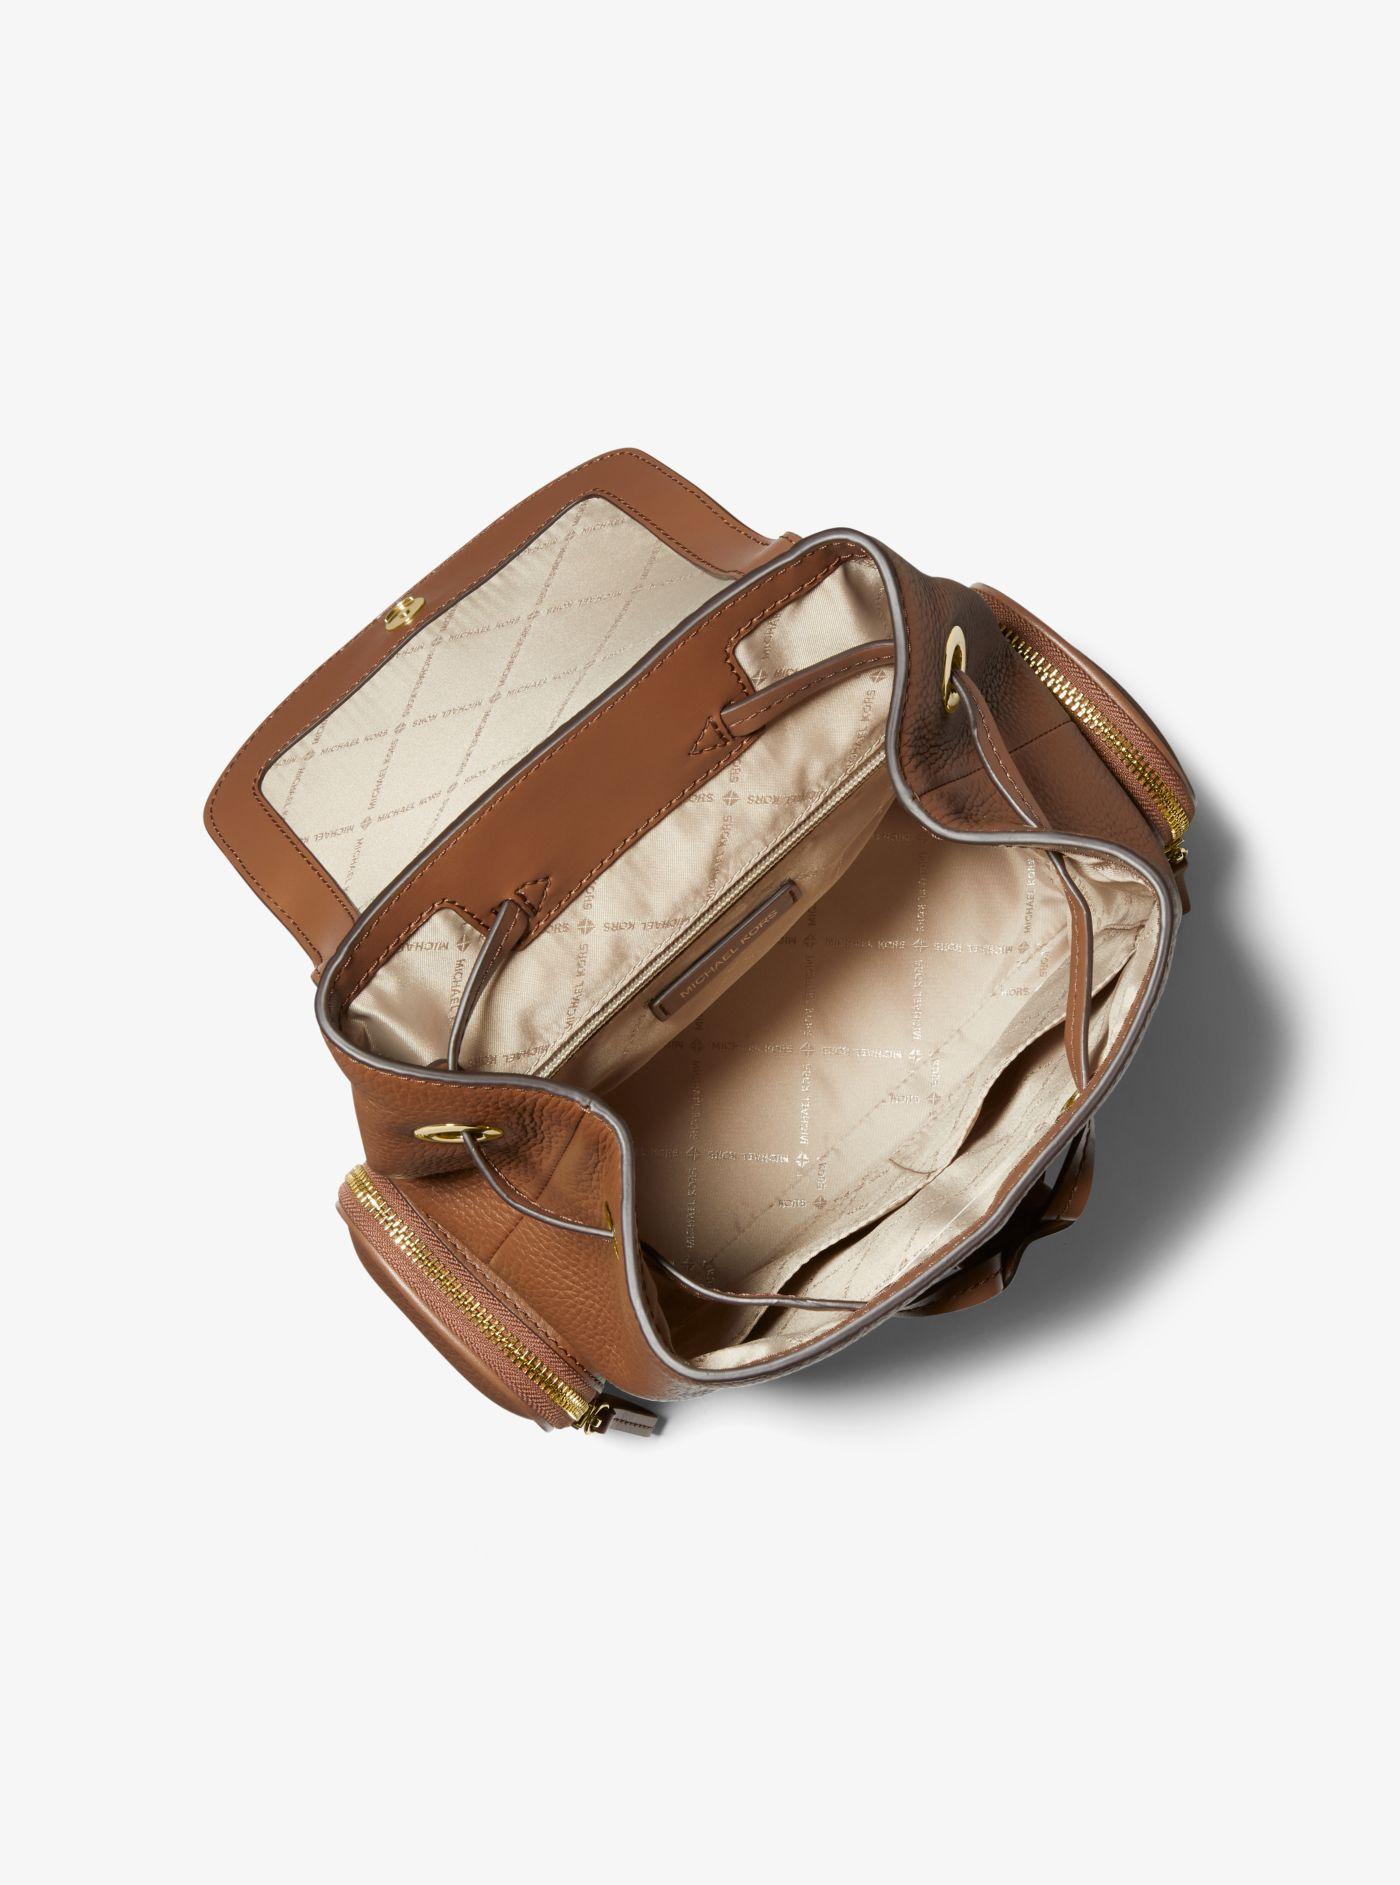 Michael Kors Jet Set Medium Pebbled Leather Backpack in Brown | Lyst